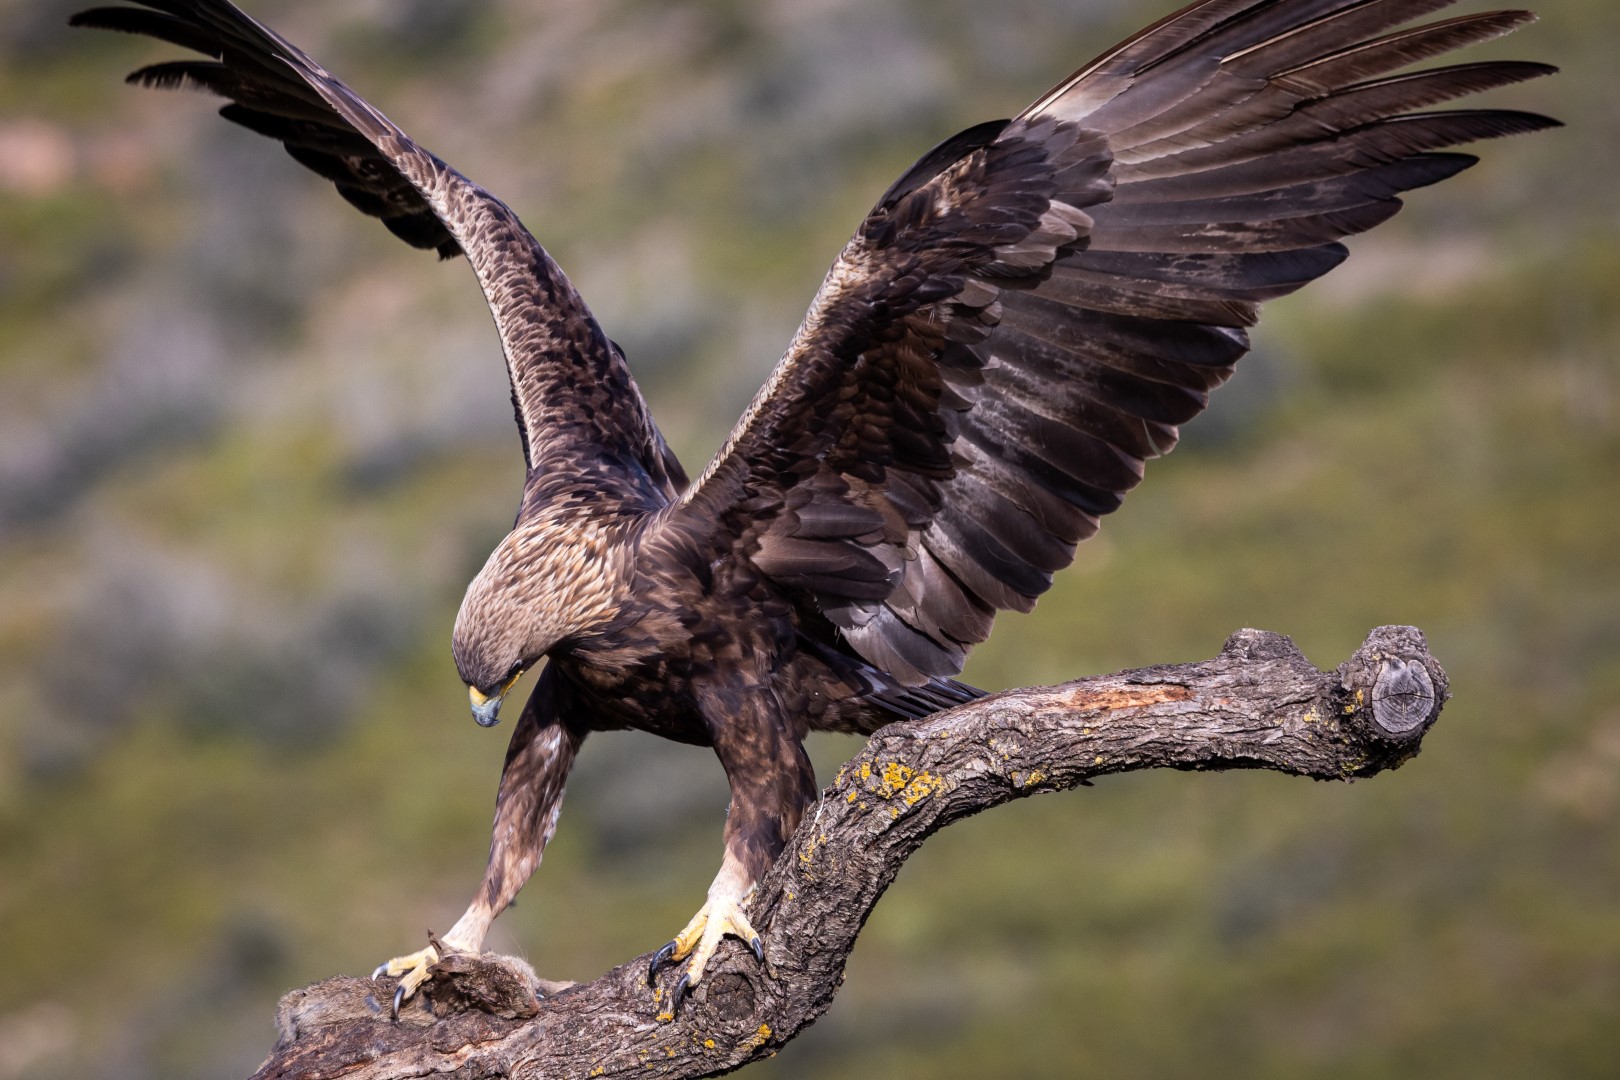 Shqiponja e malit, Foto: Arben Berisha